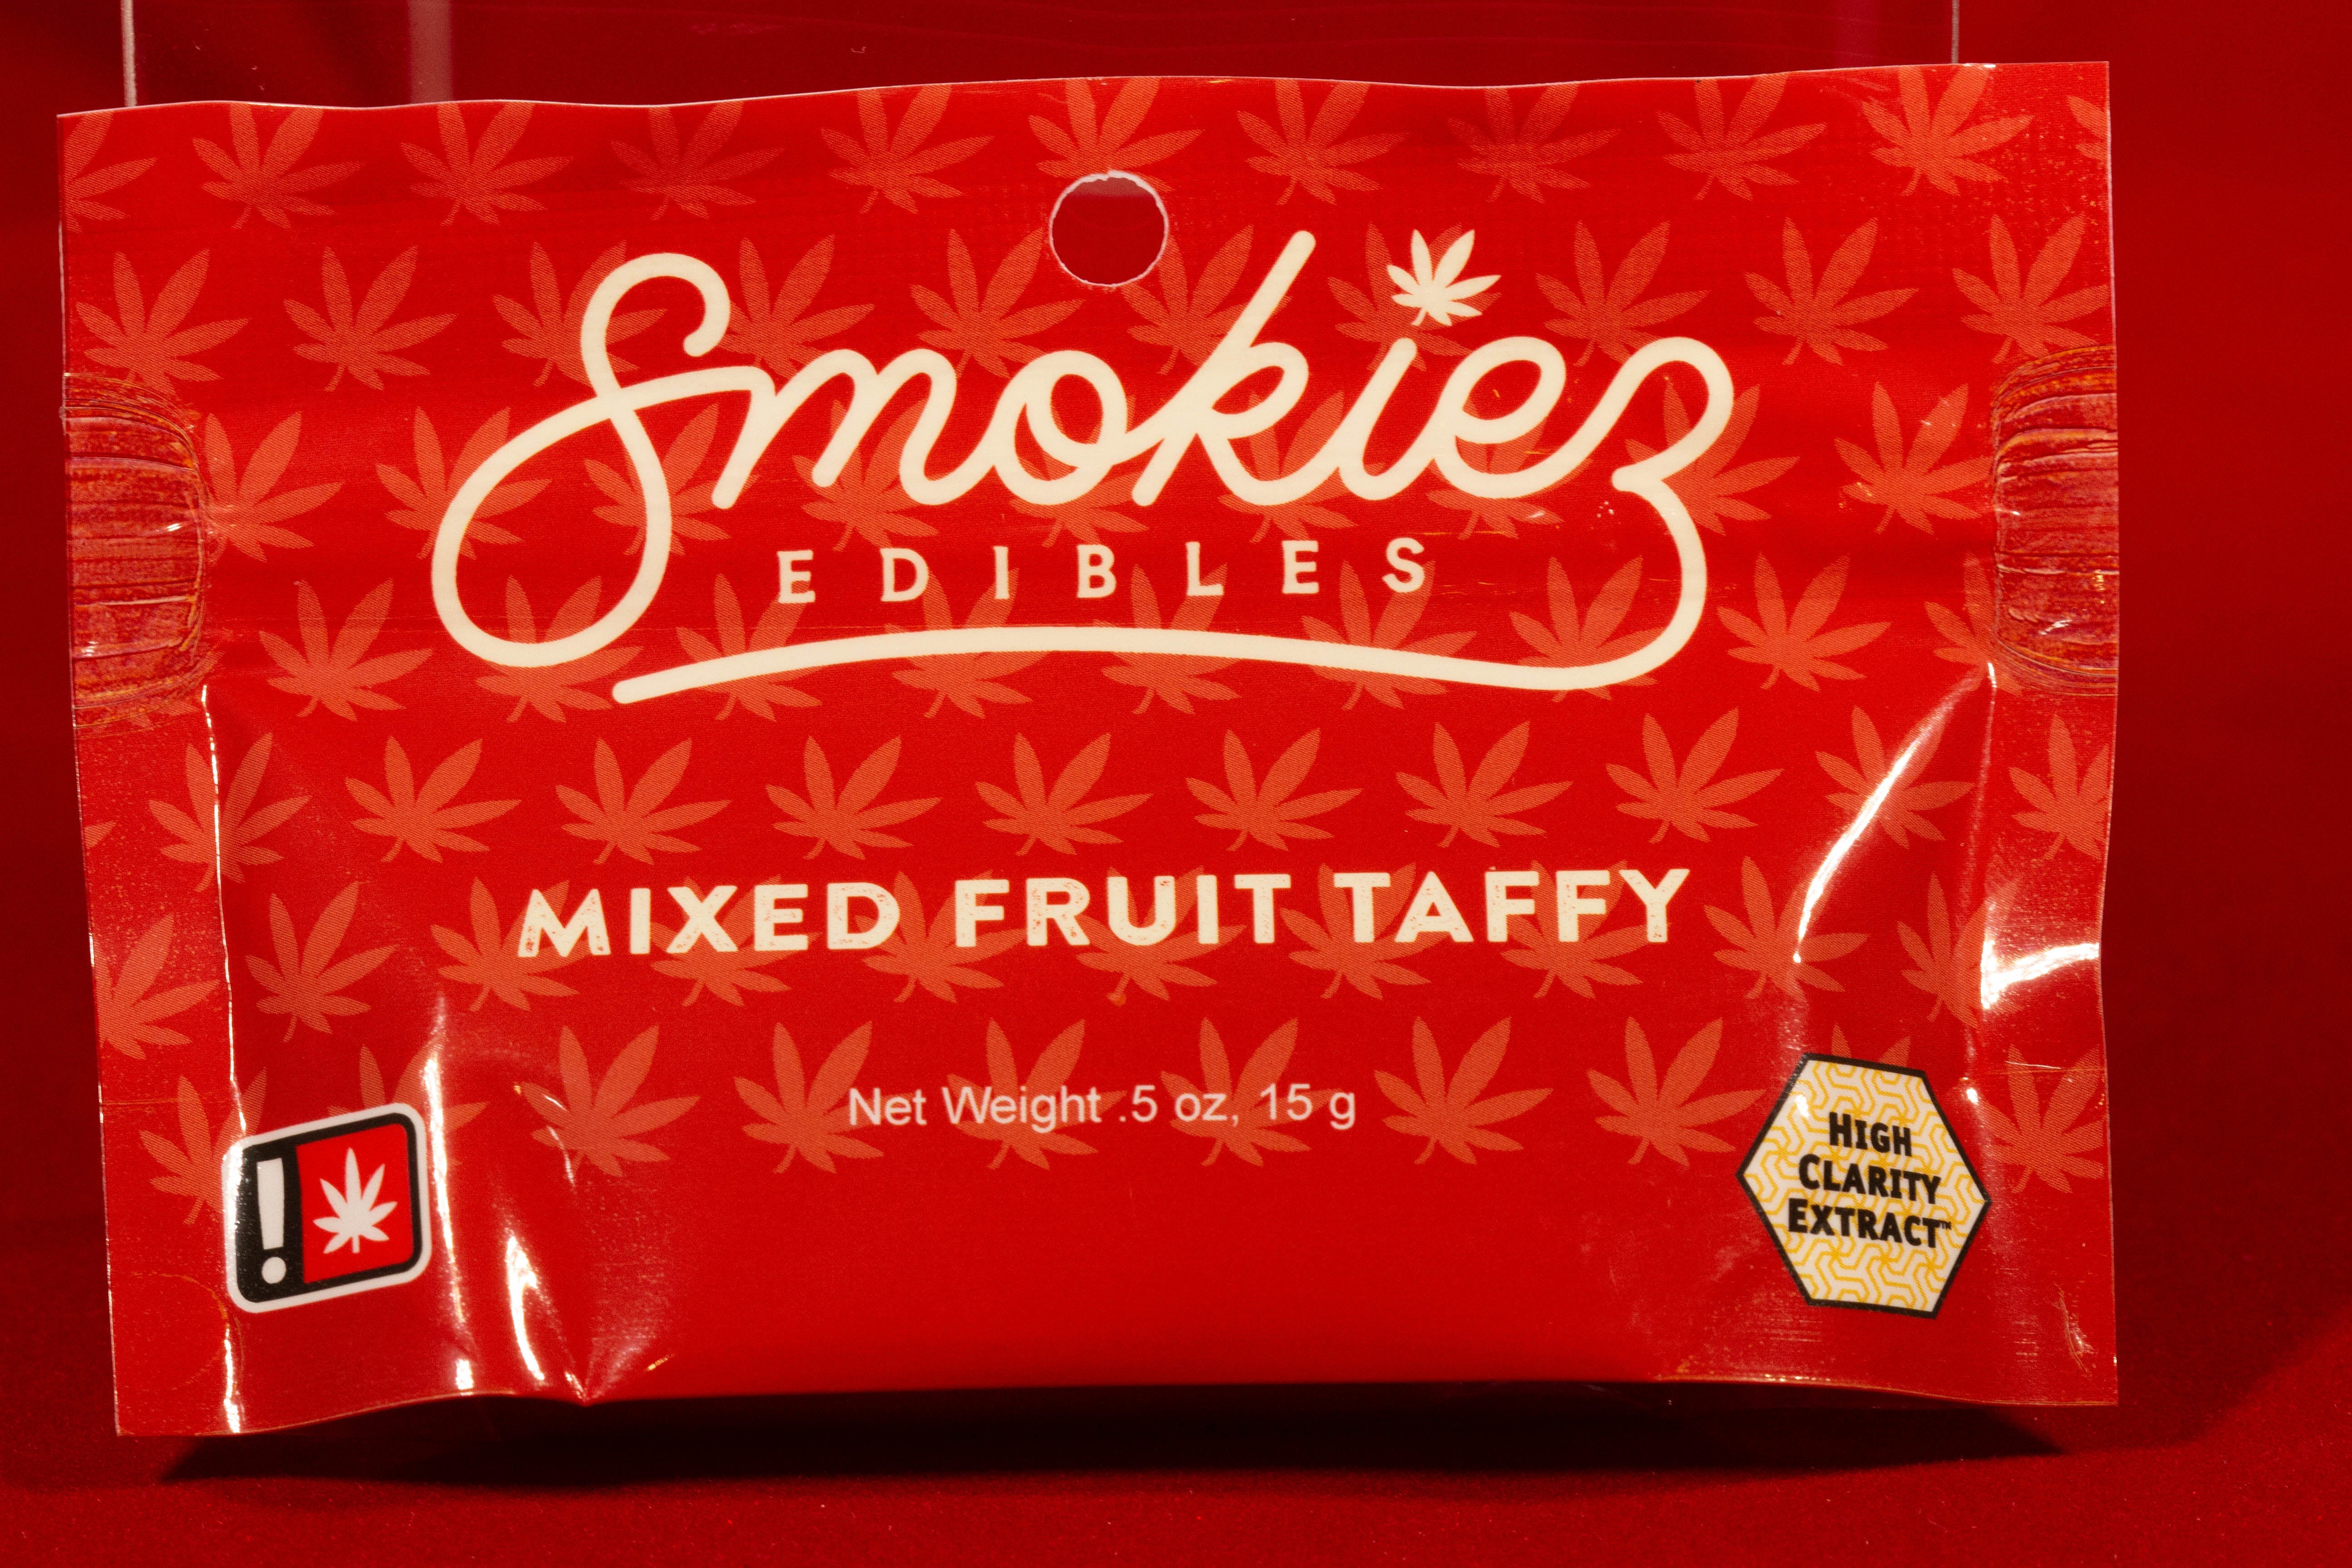 edible-mixed-fruit-taffy-by-smokiez